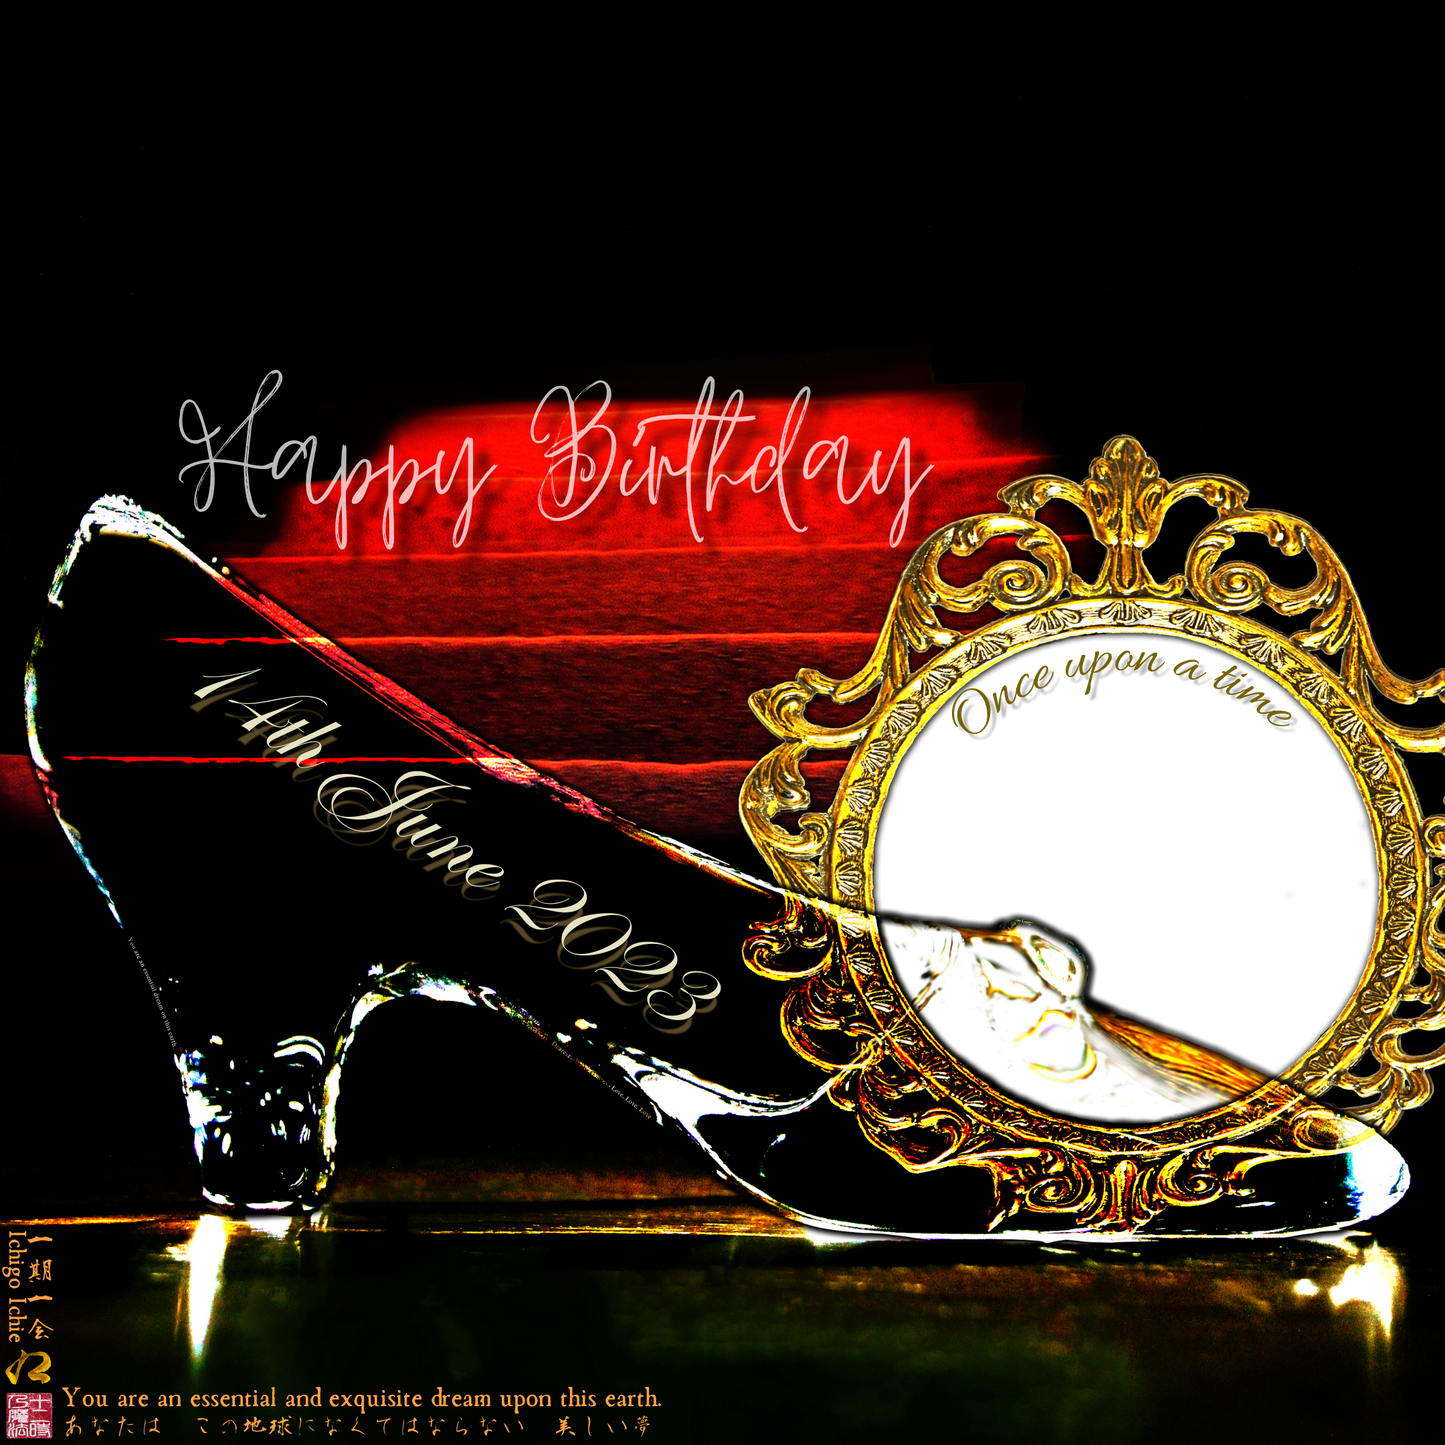 Happy Birthday Glass Slipper "Ichigo Ichie" 14th June 2023 the Right (1-of-1) NFT Art